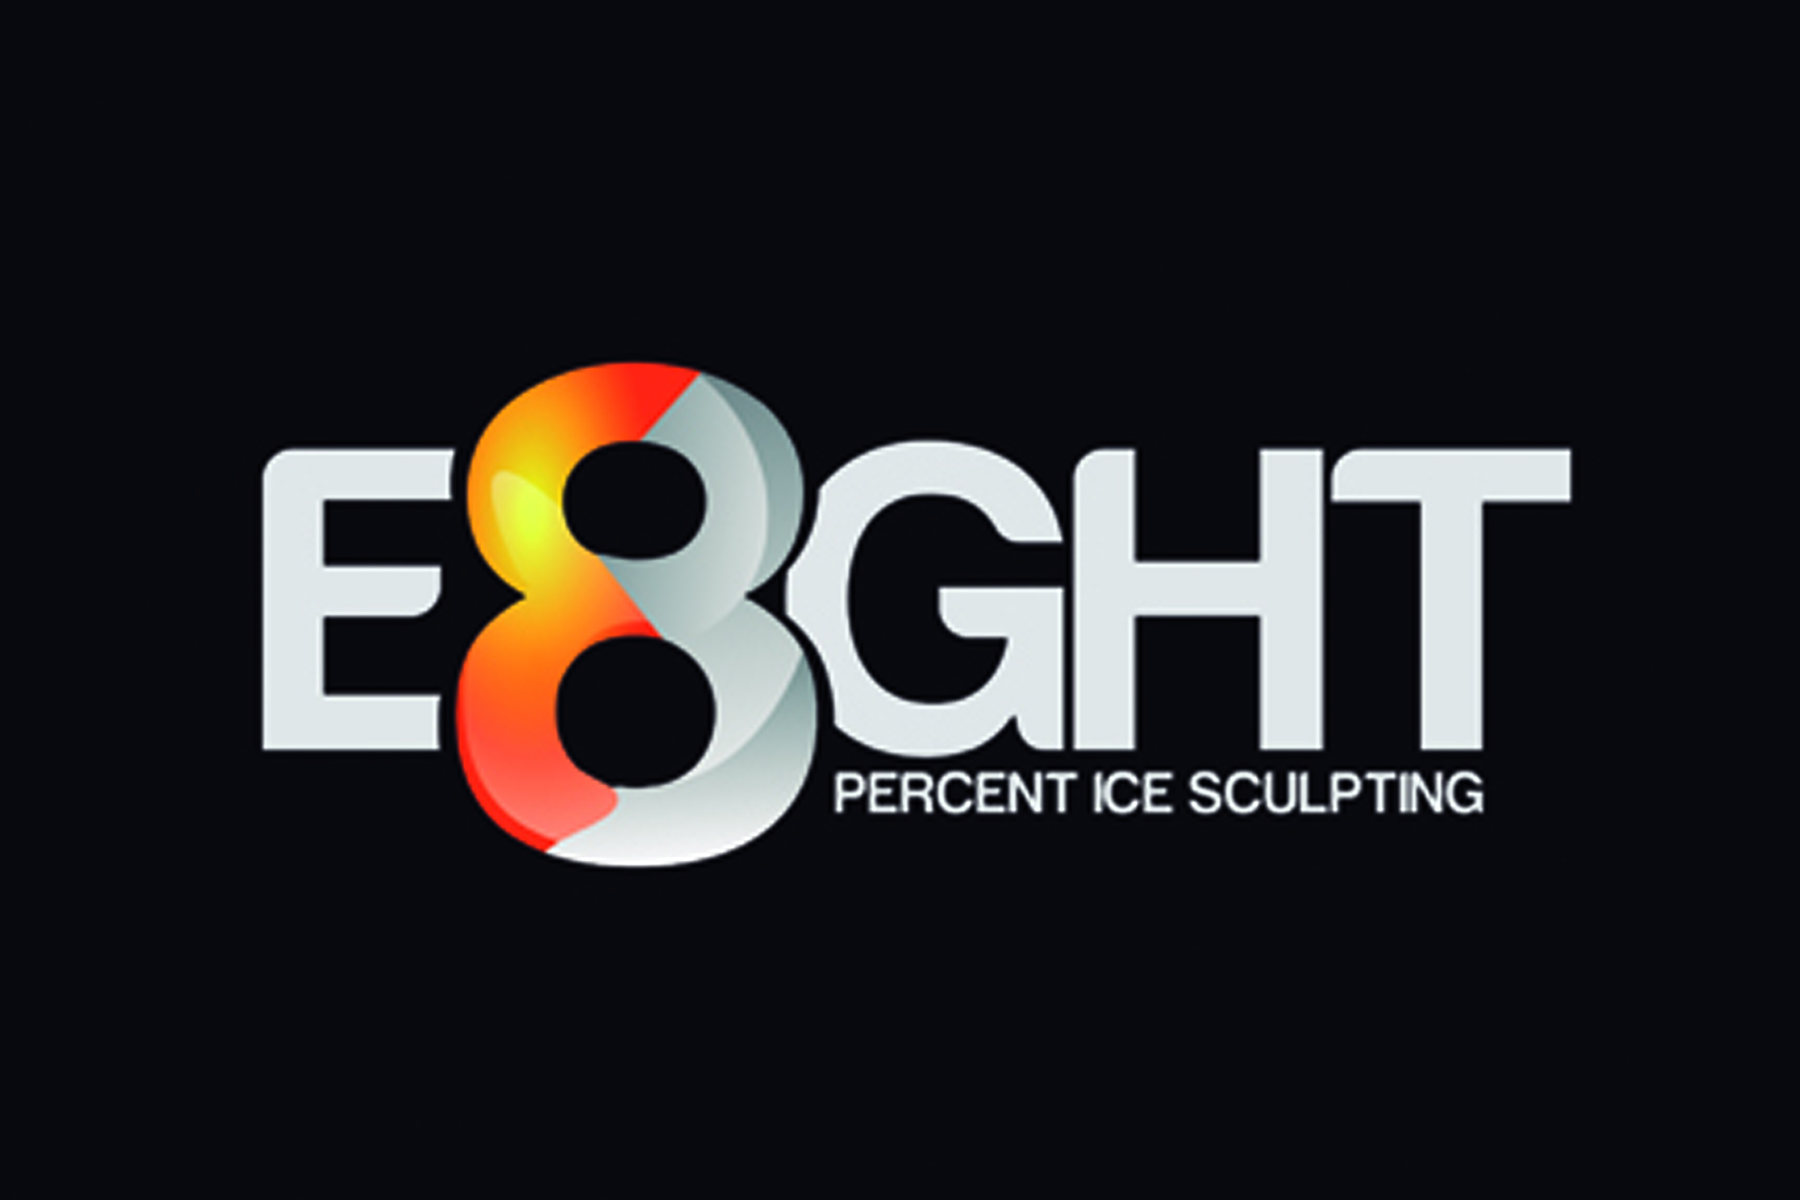 E8GHT Percent Ice Sculpting